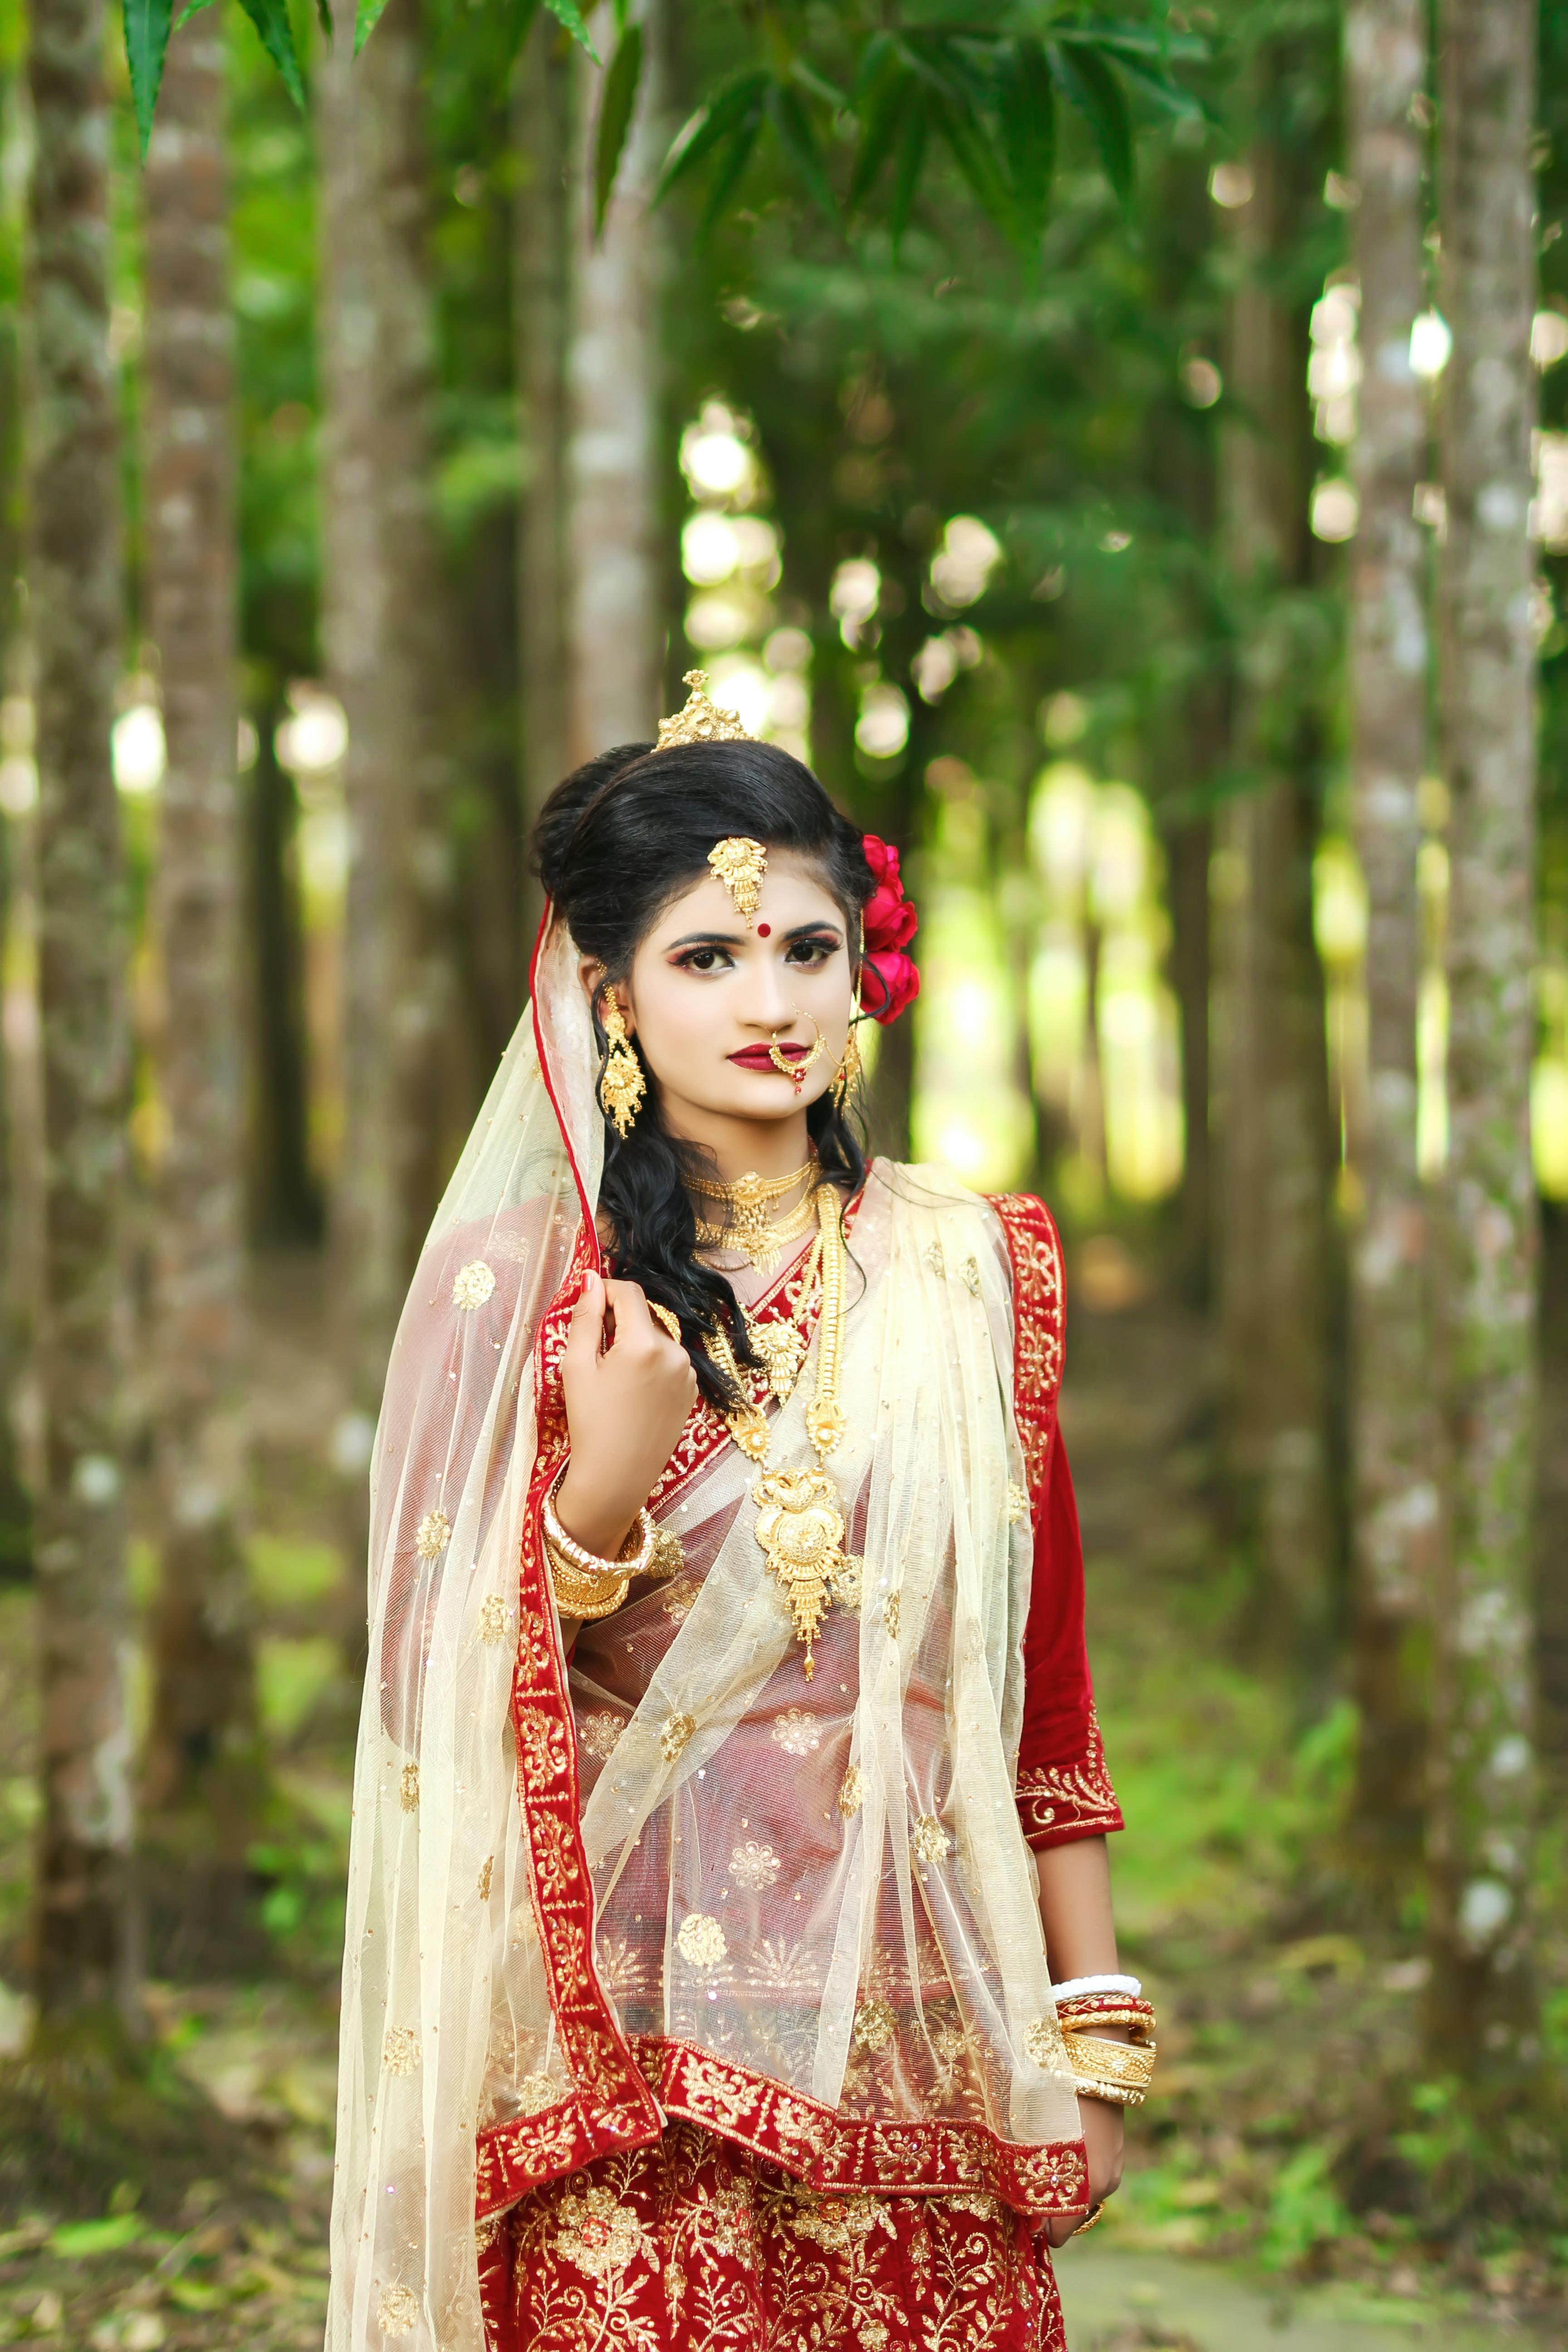 Pin by sj miln on gallari | Indian wedding bride, Bridal photography poses, Bengali  bridal makeup